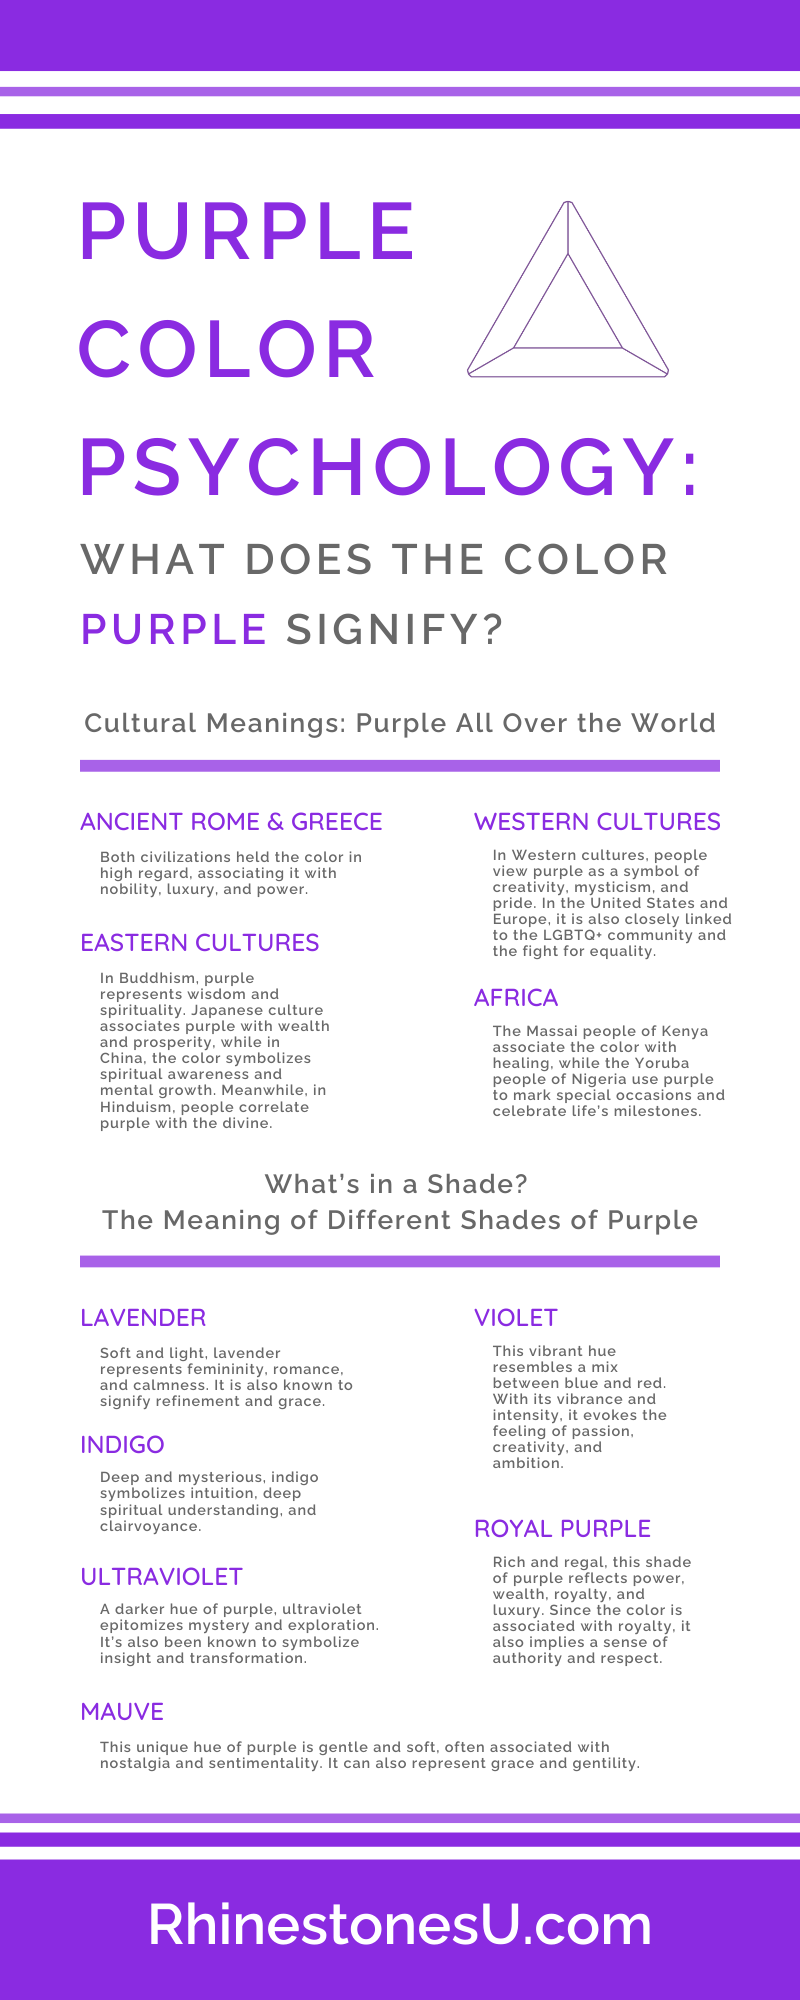 Purple Color Psychology: What Does the Color Purple Signify?